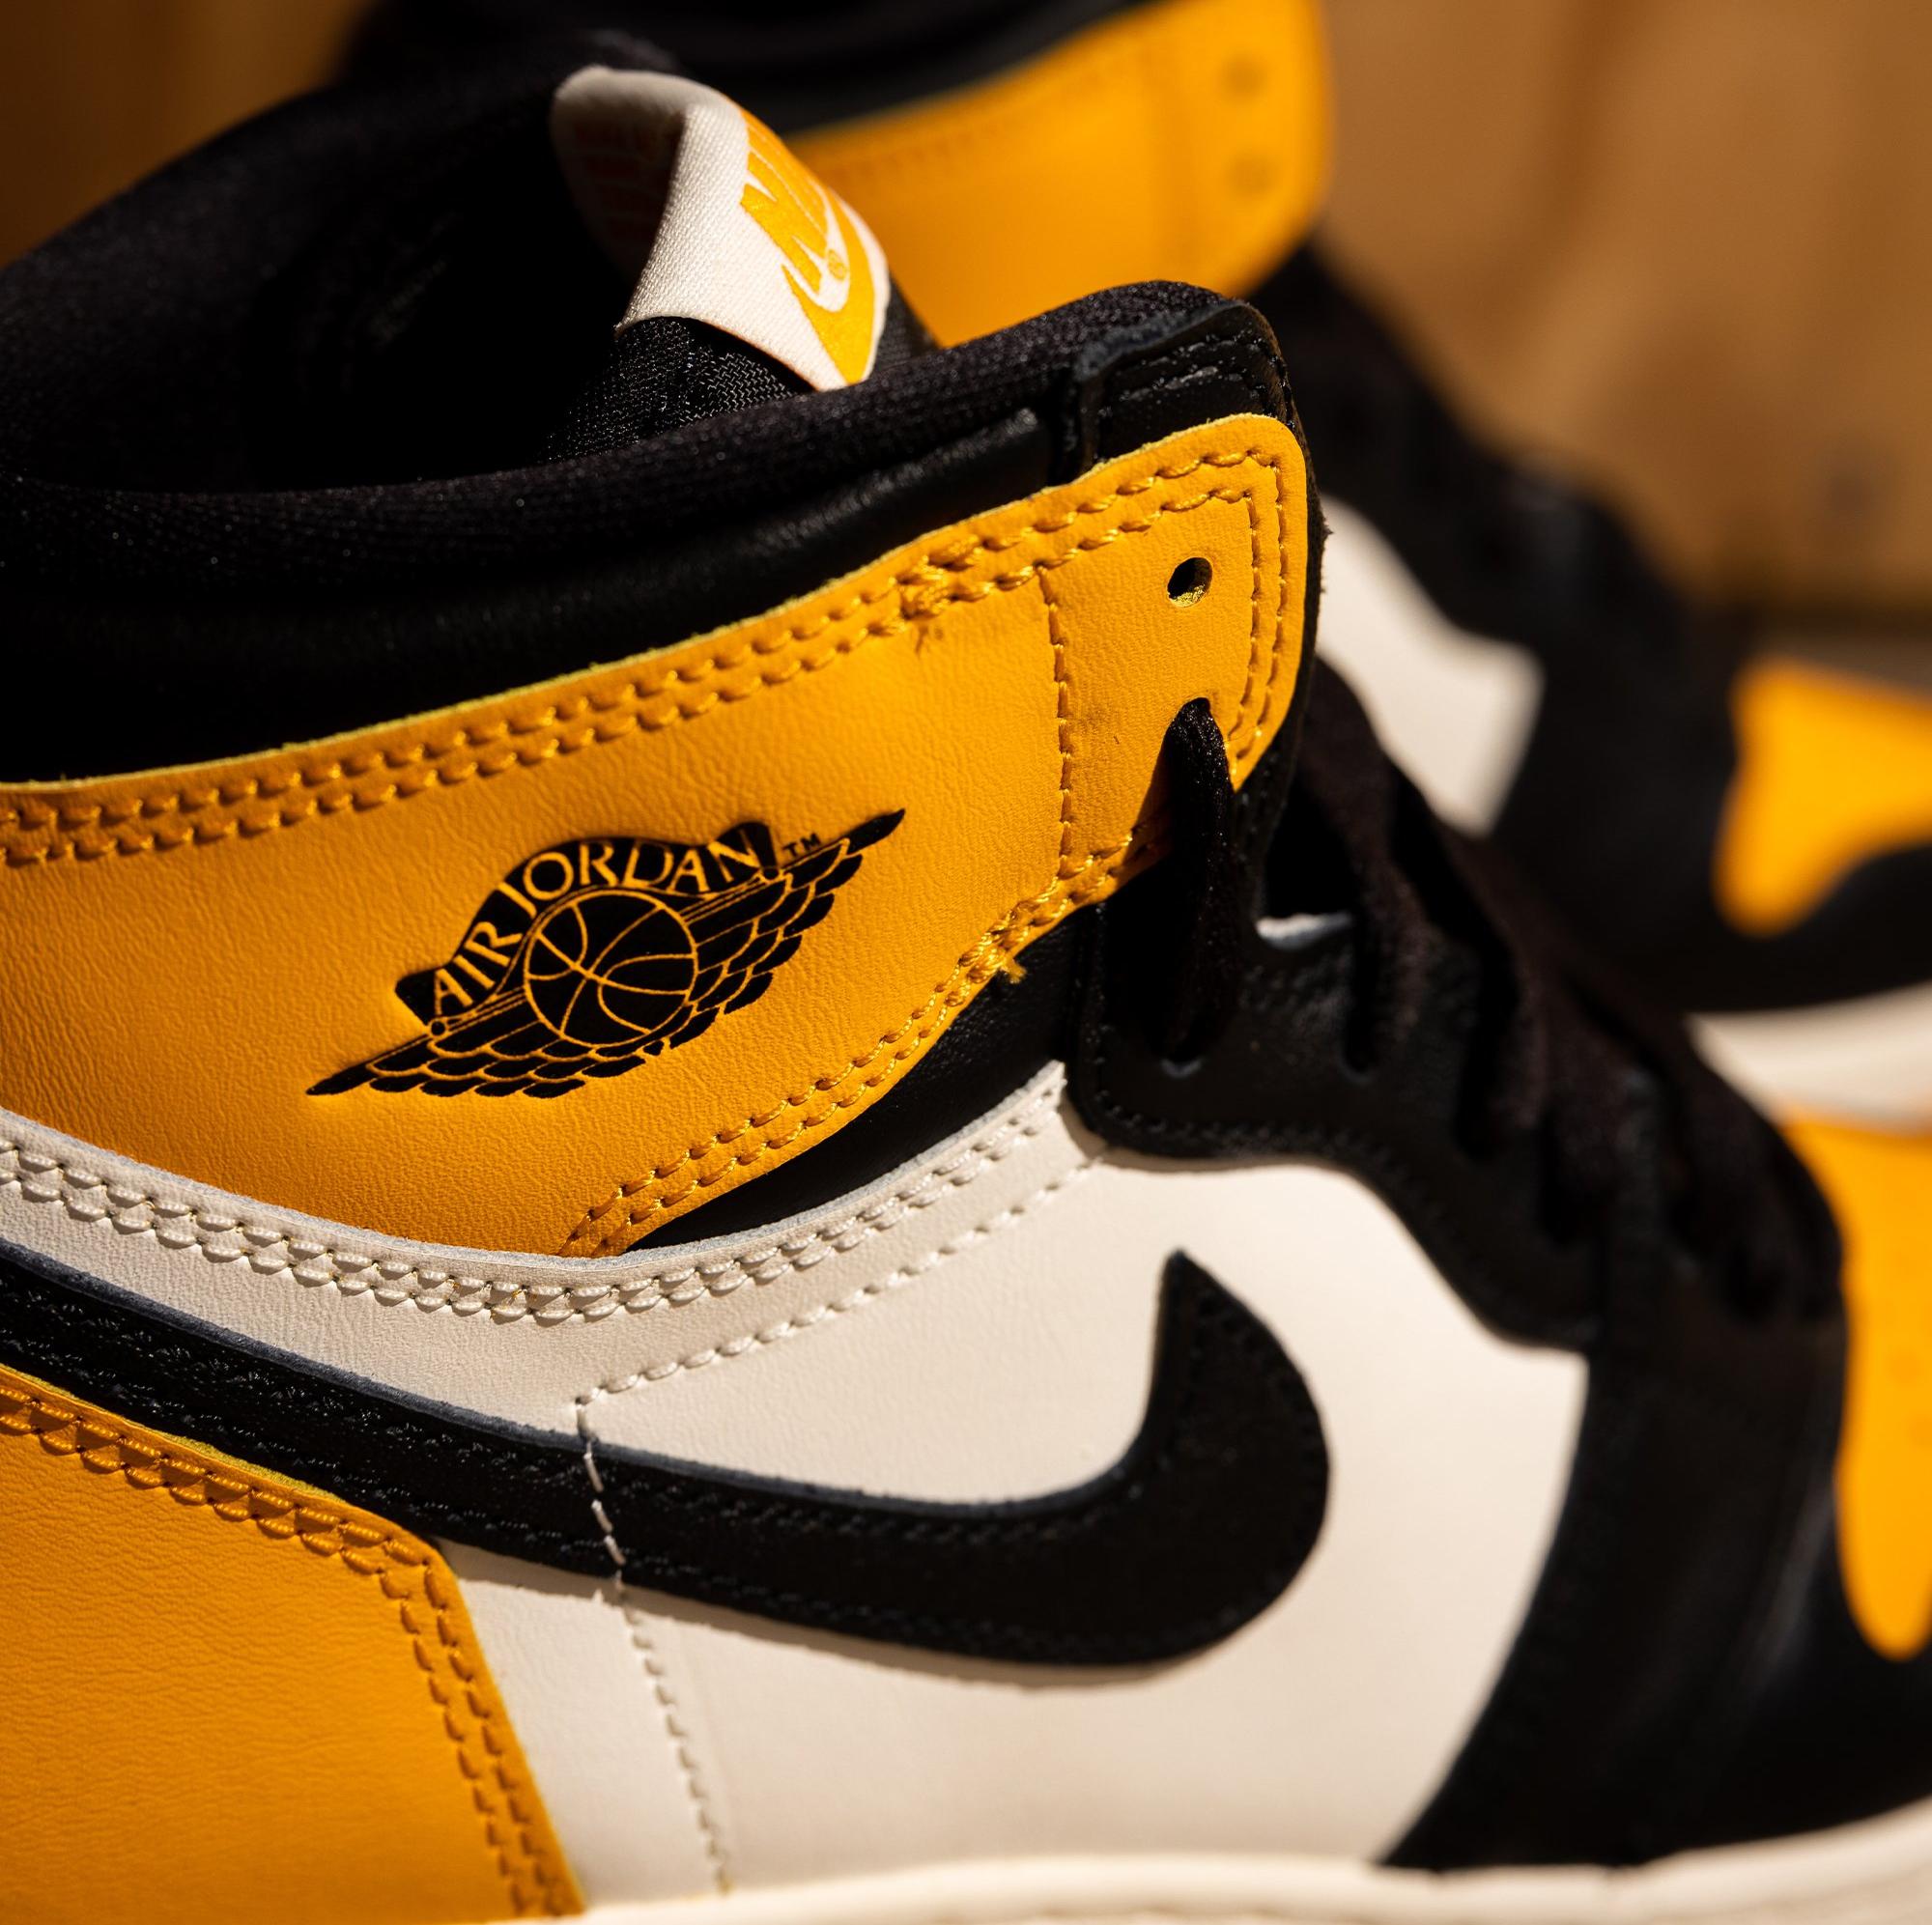 Sneakers Release – Jordan 1 Retro High OG “Taxi&